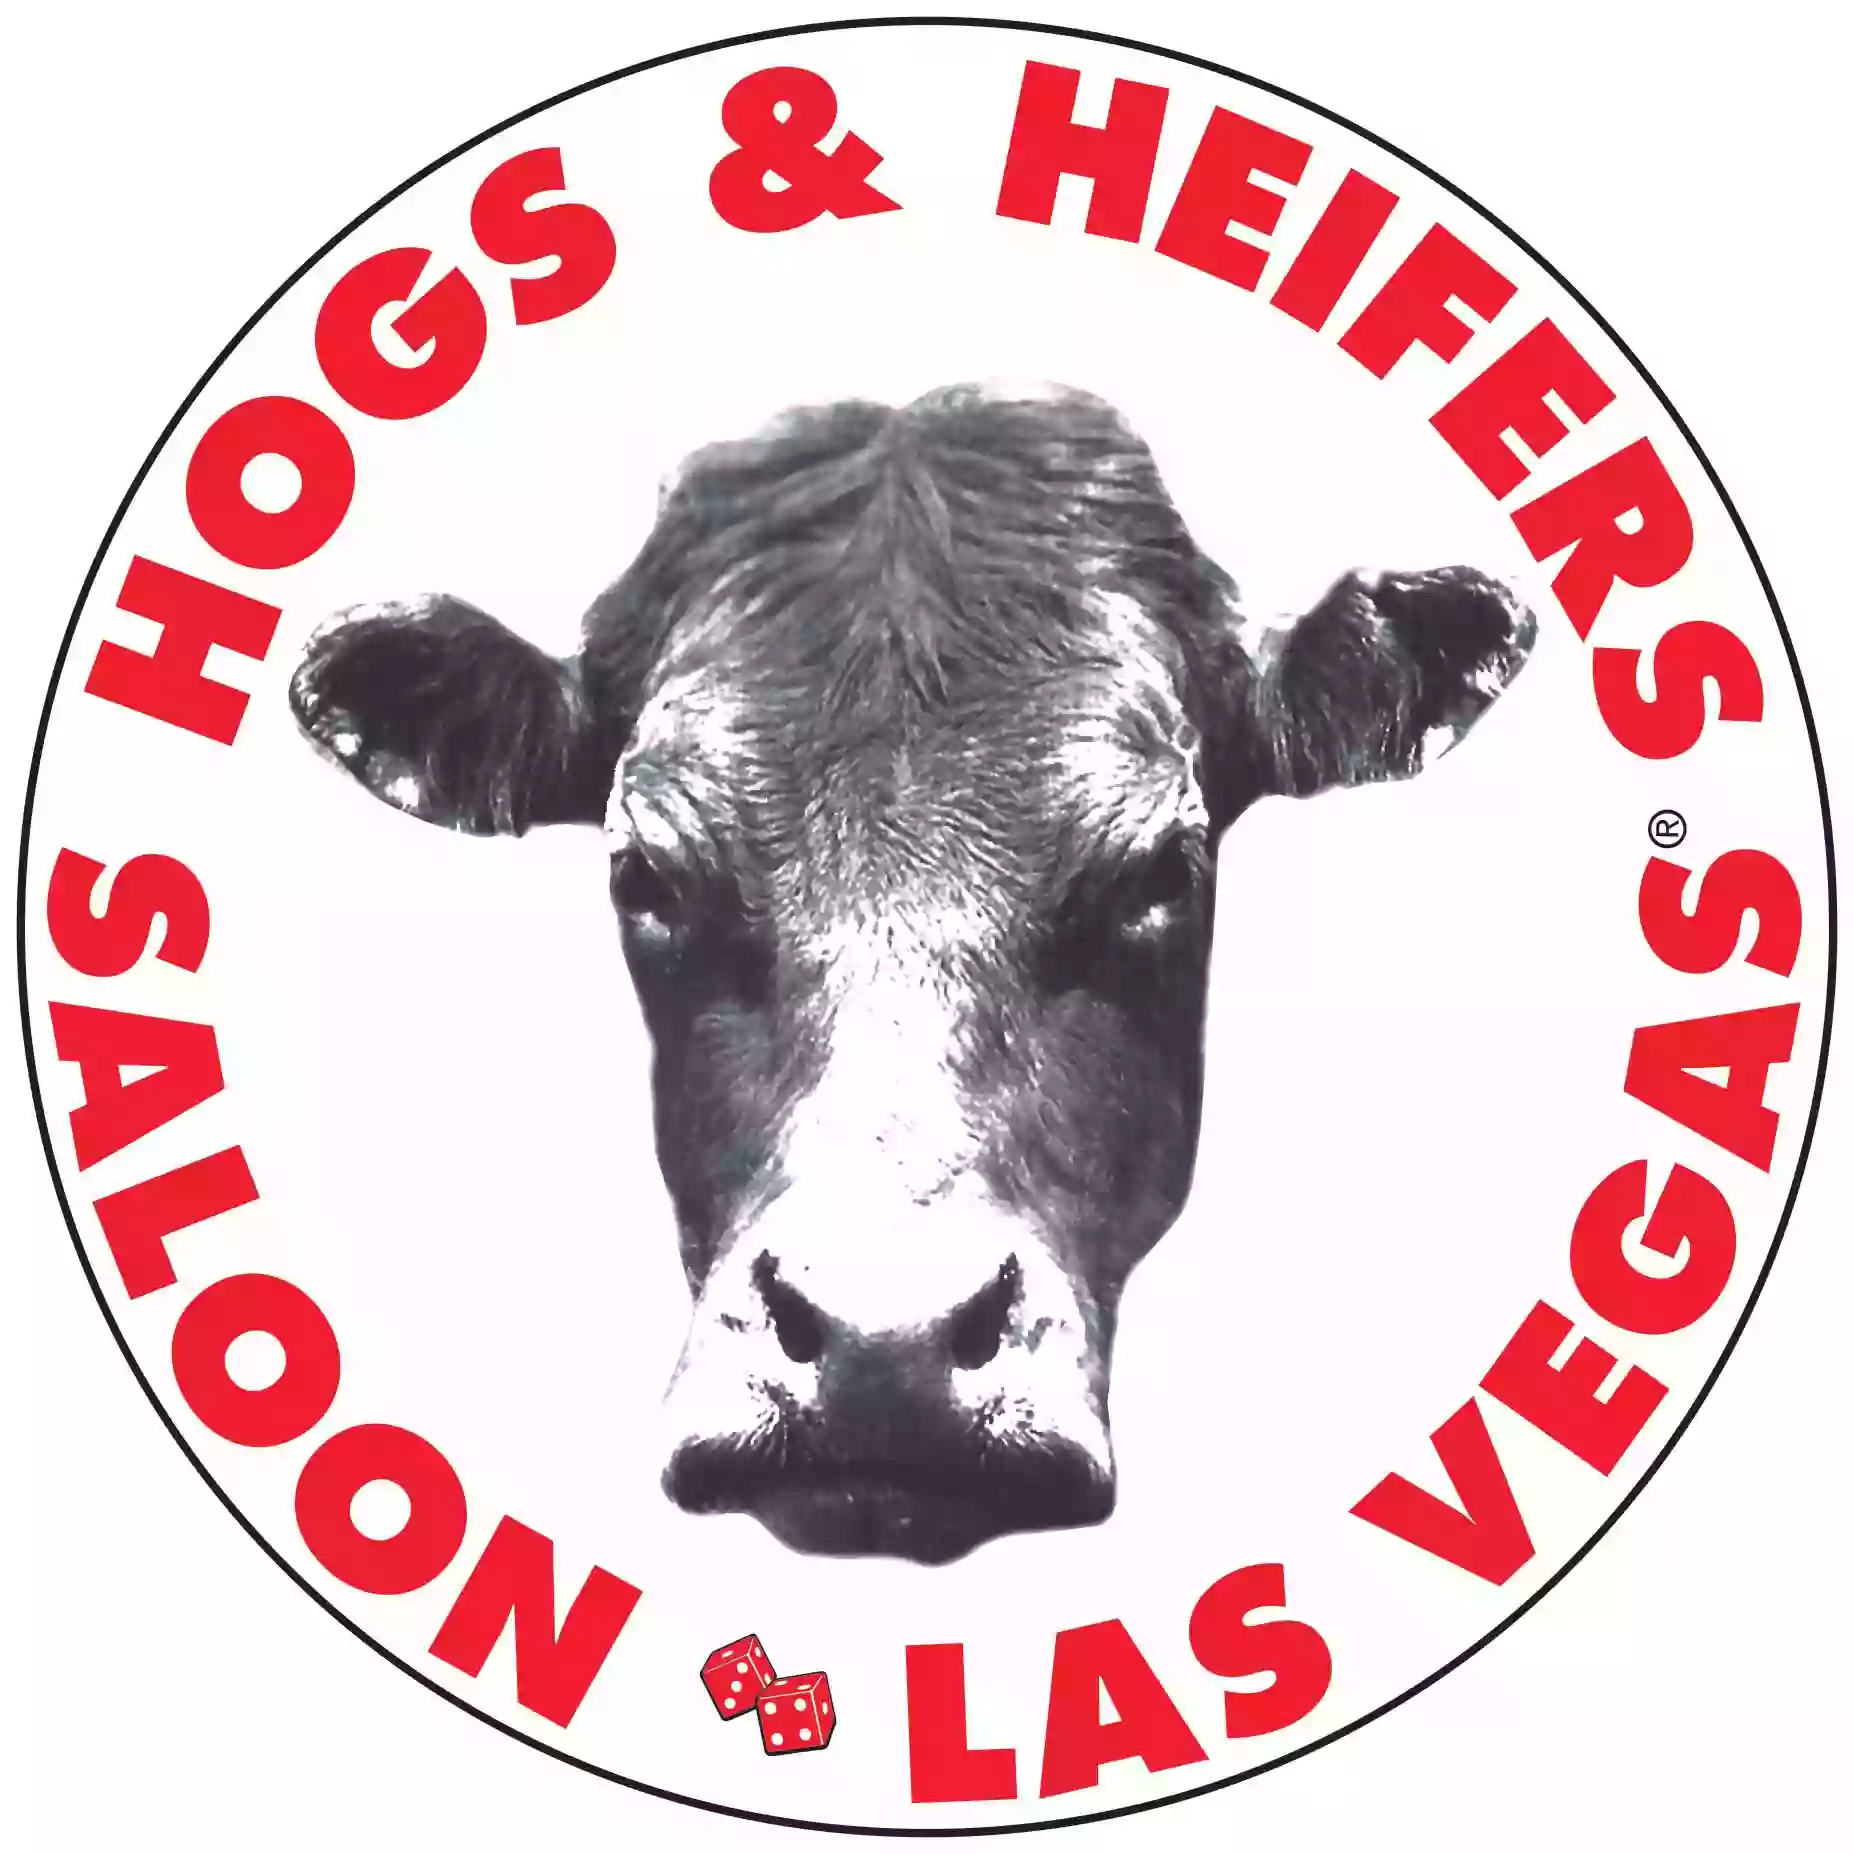 Hogs & Heifers Saloon